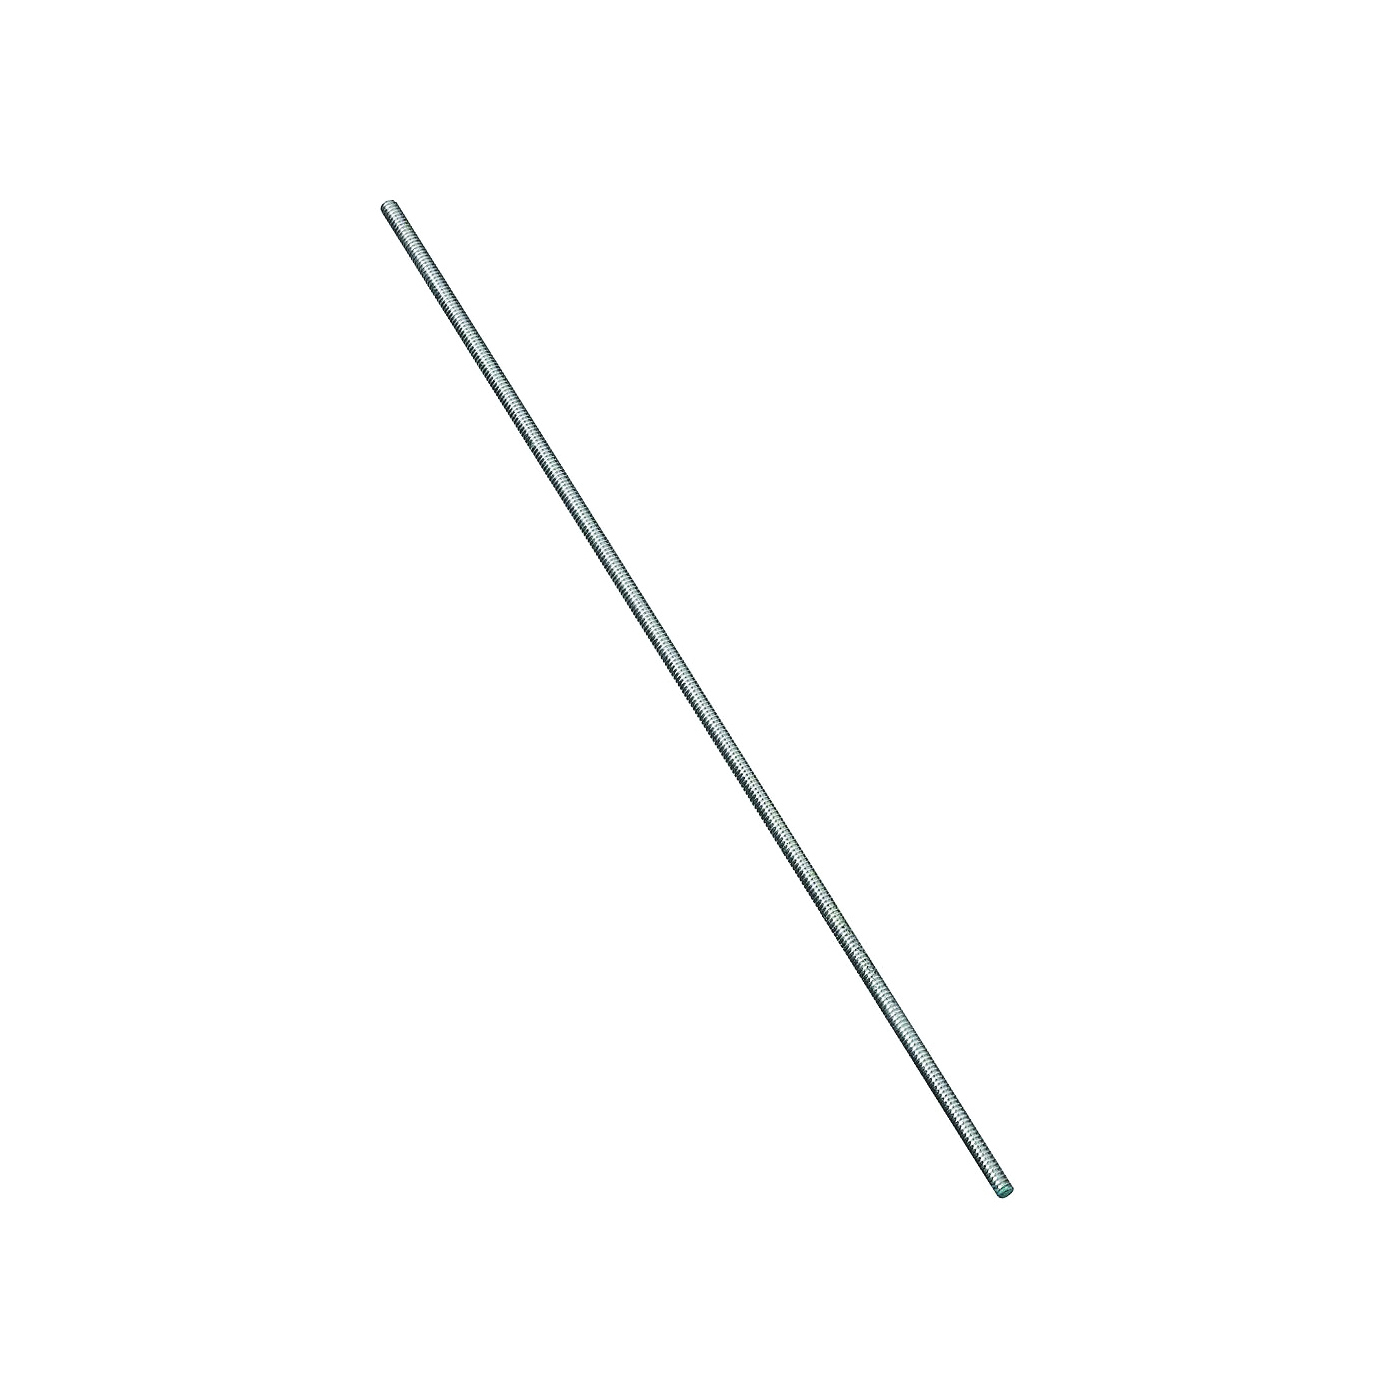 N179-408 Threaded Rod, #10-24 Thread, 24 in L, A Grade, Steel, Zinc, UNC Thread